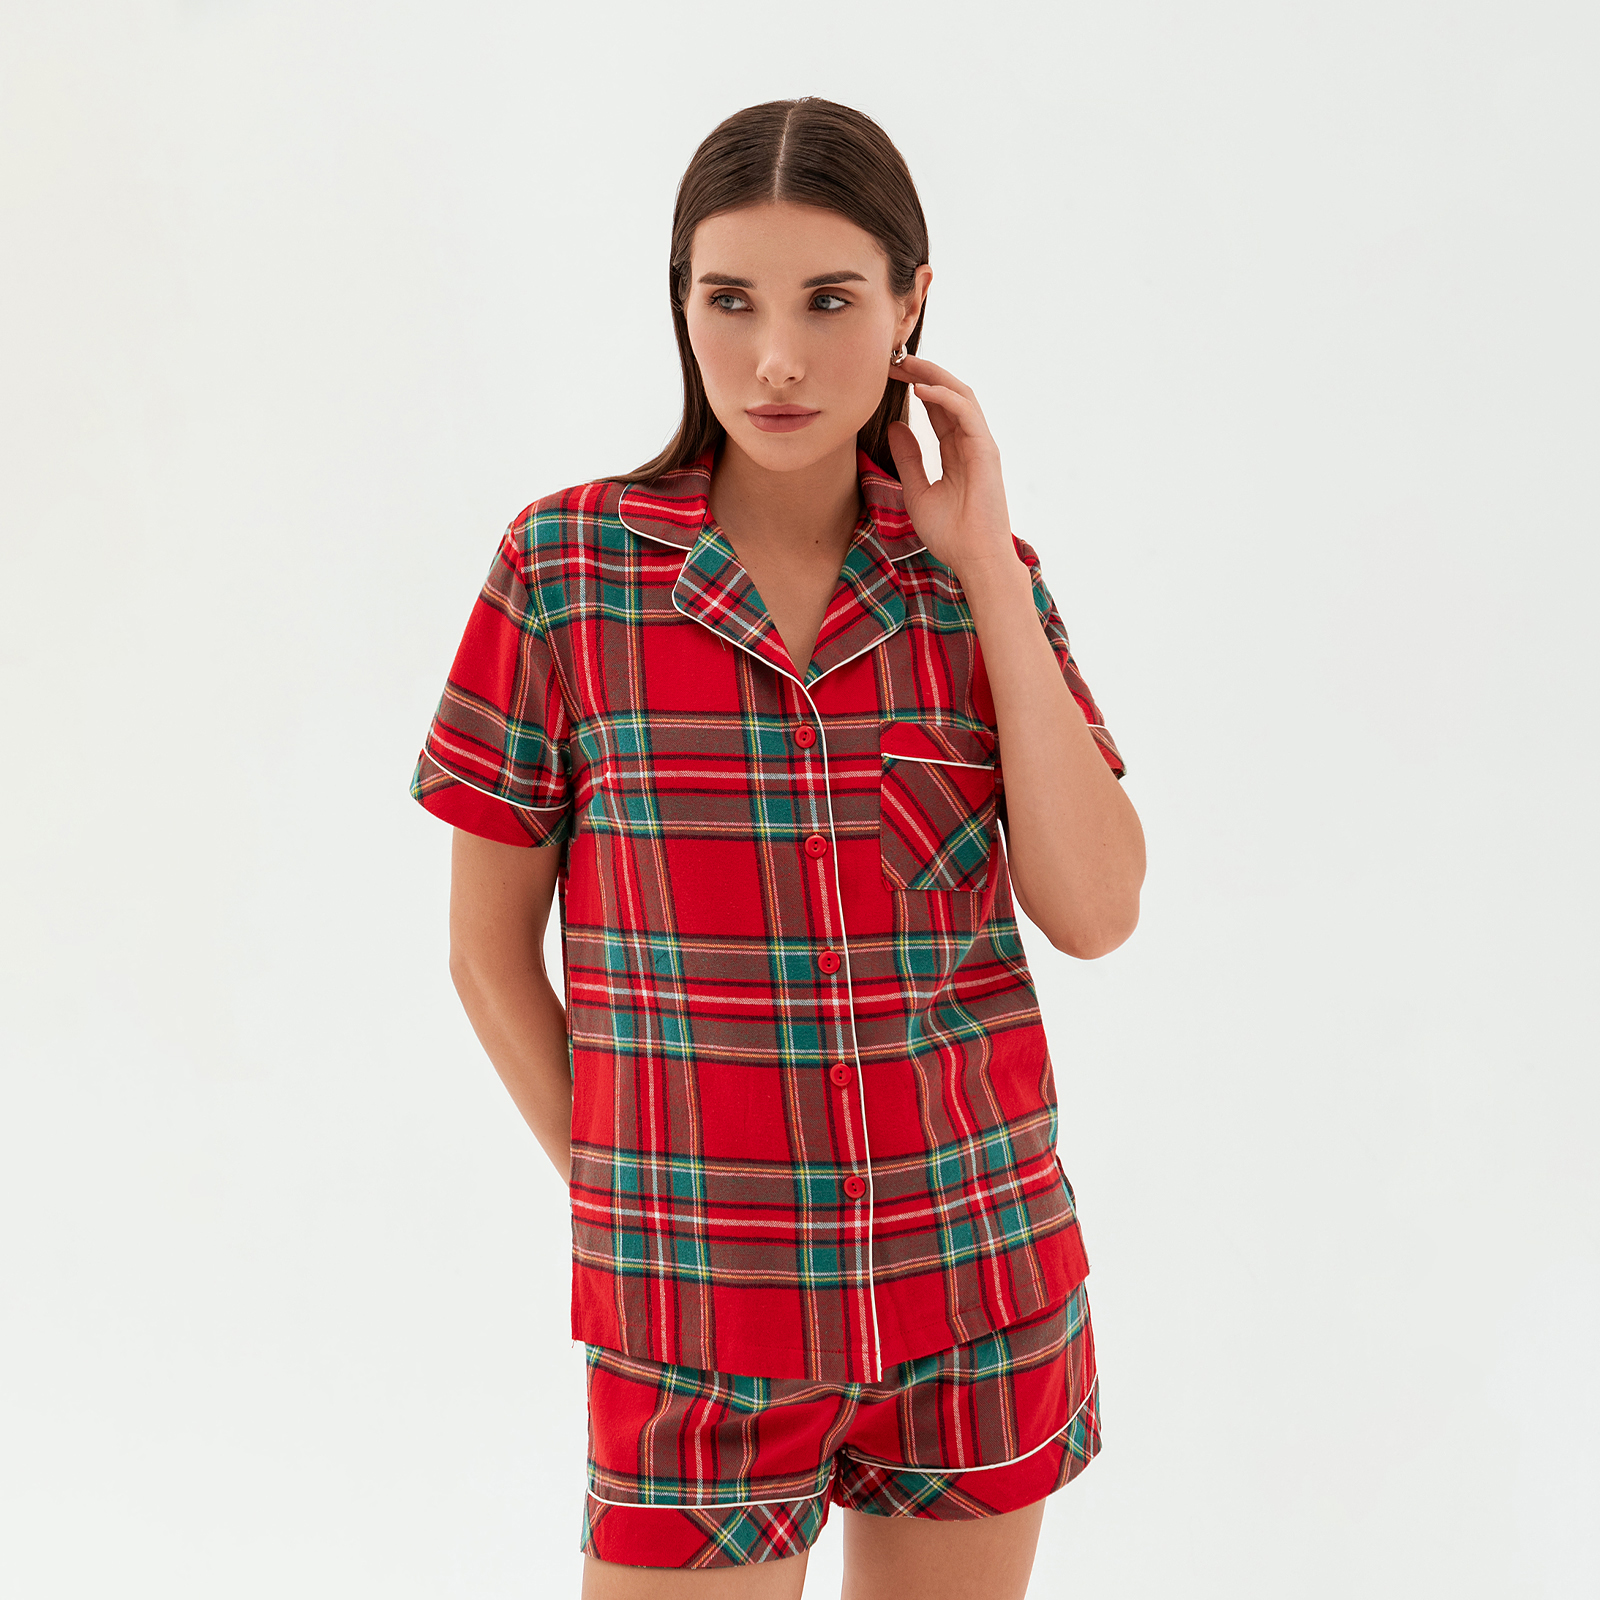 Пижама Gabbia rossa II жен пижама с брюками арт 16 0661 красный р 46